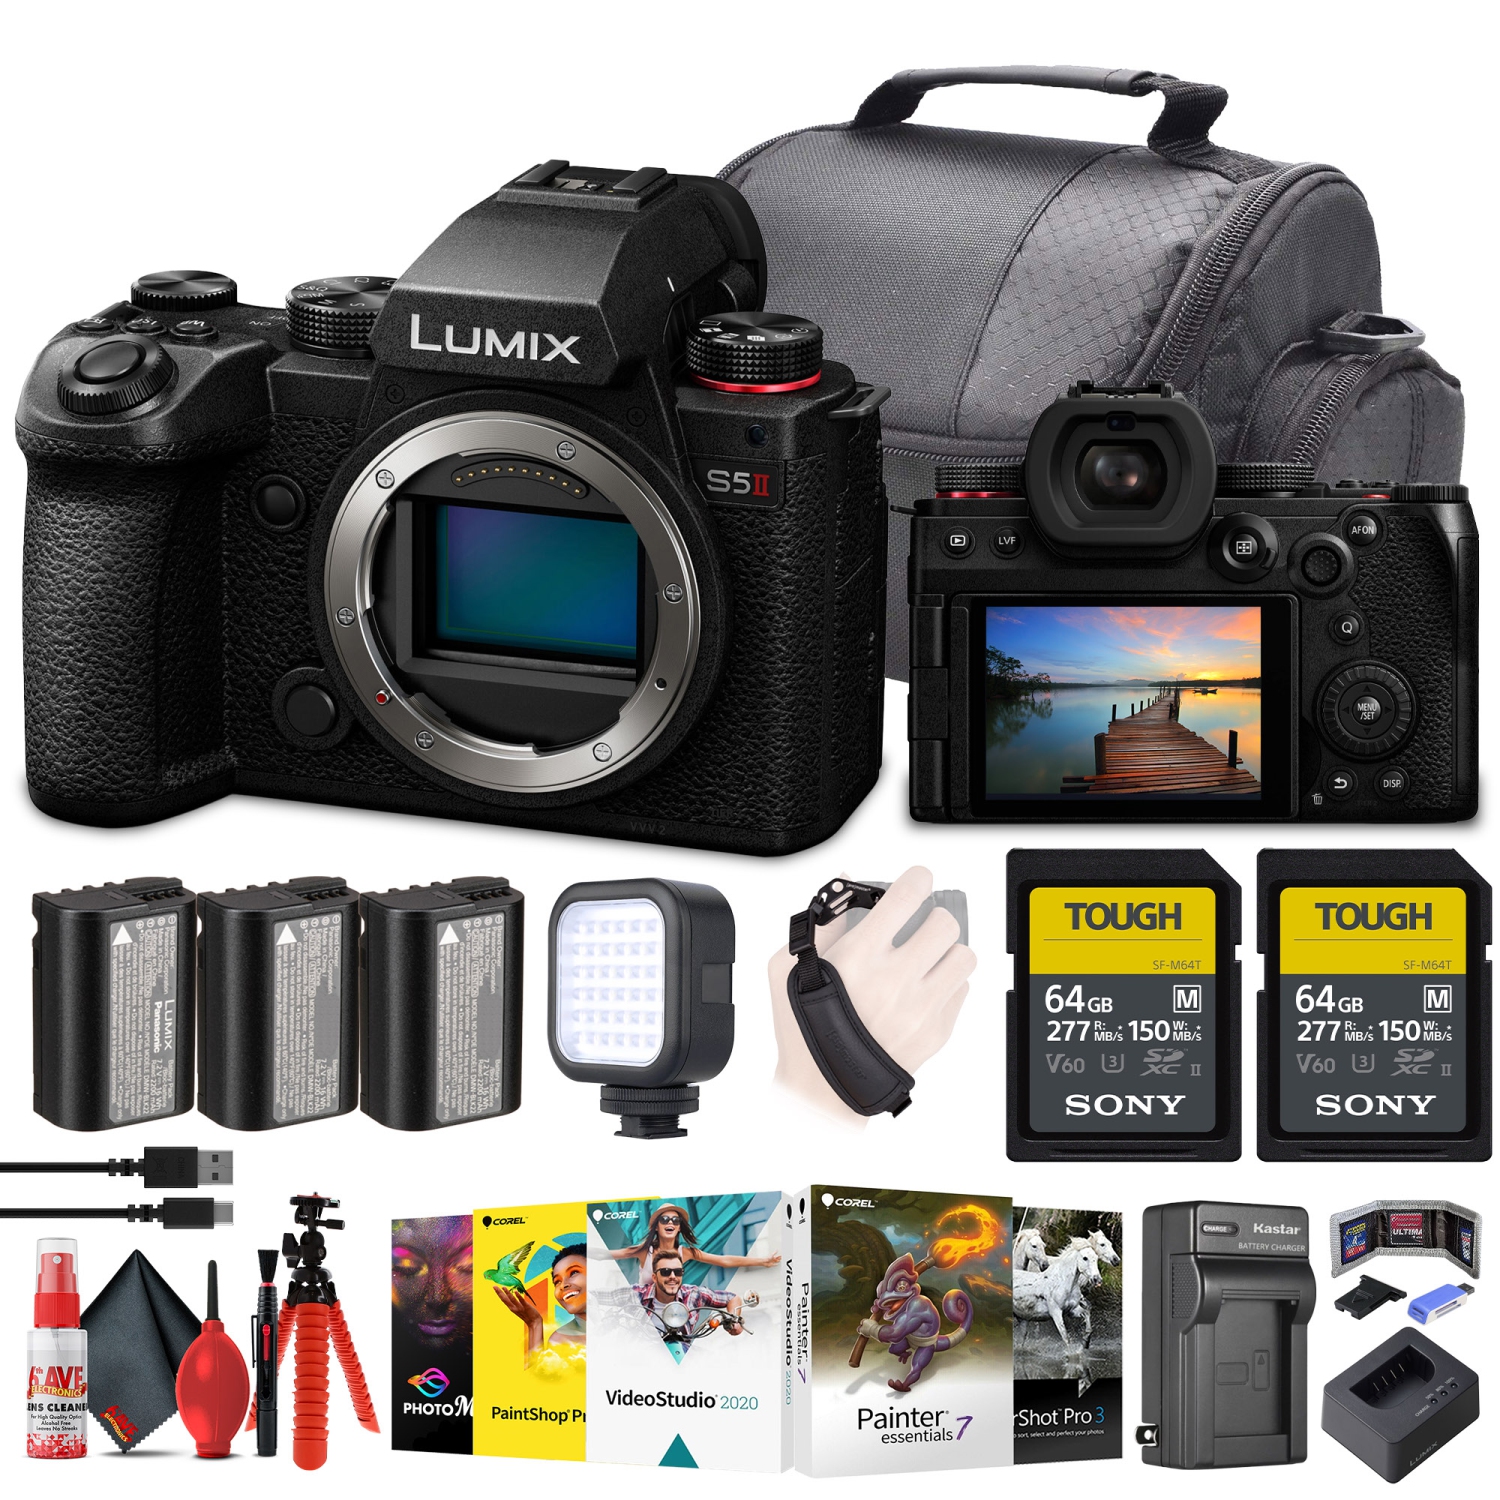 Panasonic Lumix S5 II Mirrorless Camera + 2 x 64GB Memory Card + Corel Photo Software + More